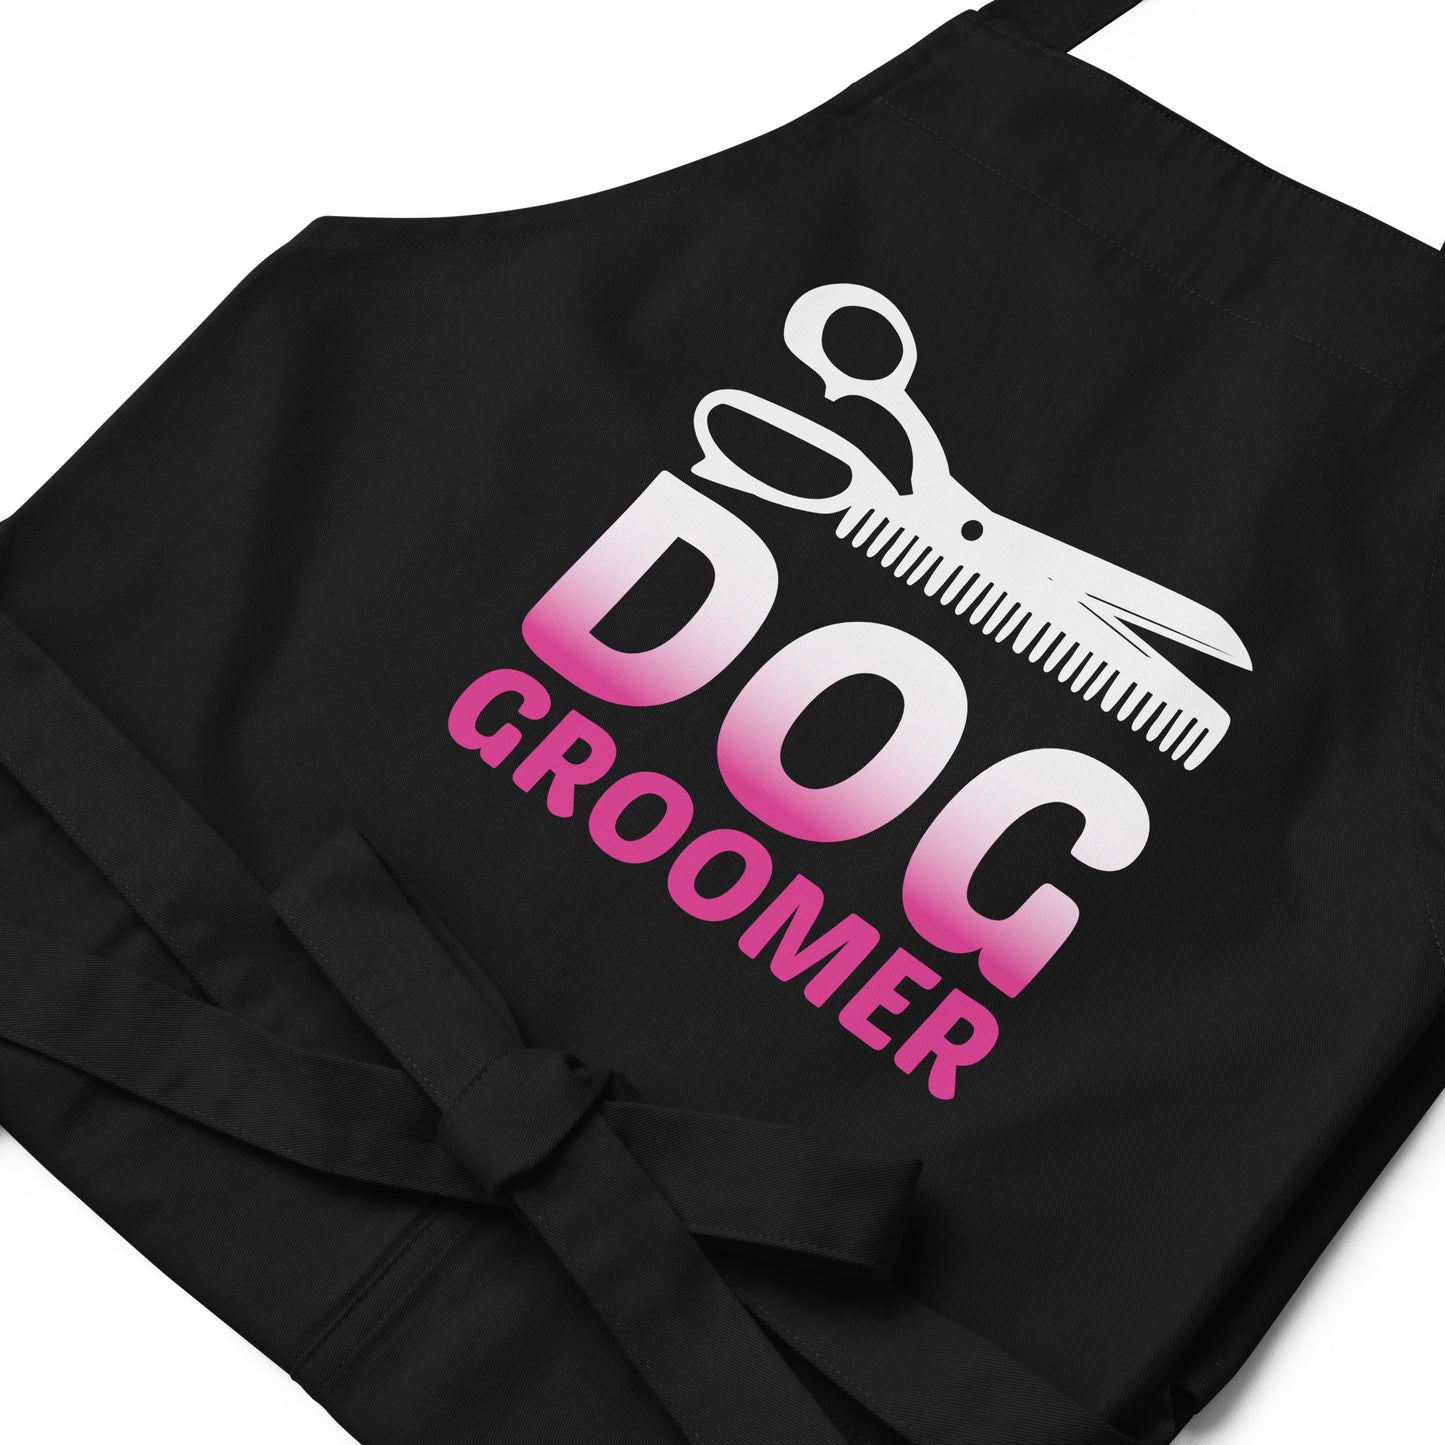 Dog Groomer Organic cotton apron